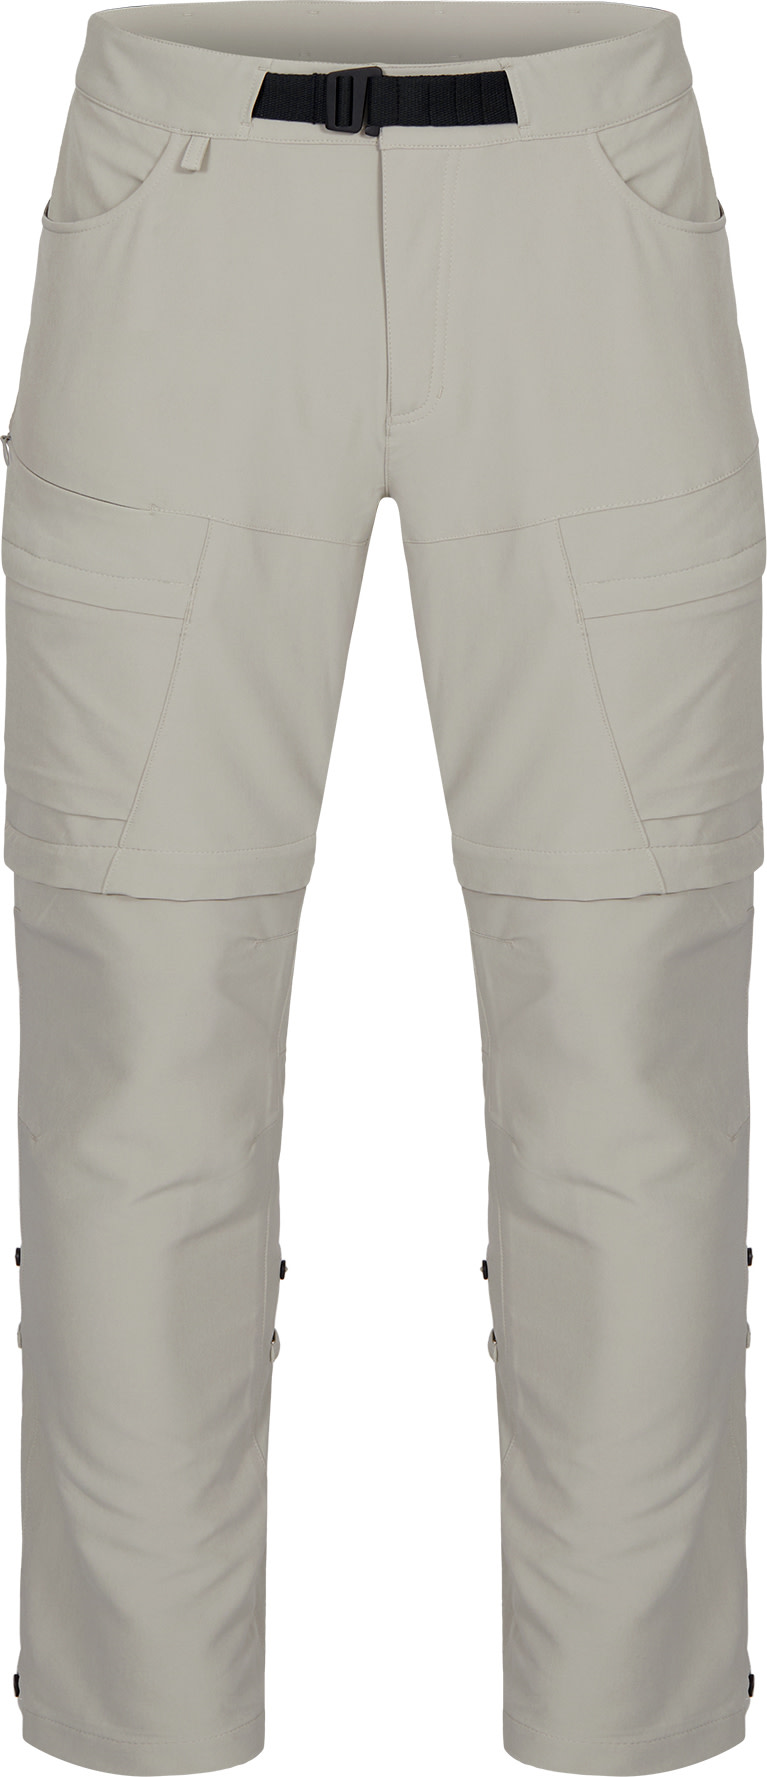 Buy Men's Regular Off Road Hiking Trousers NH500 Online | Decathlon